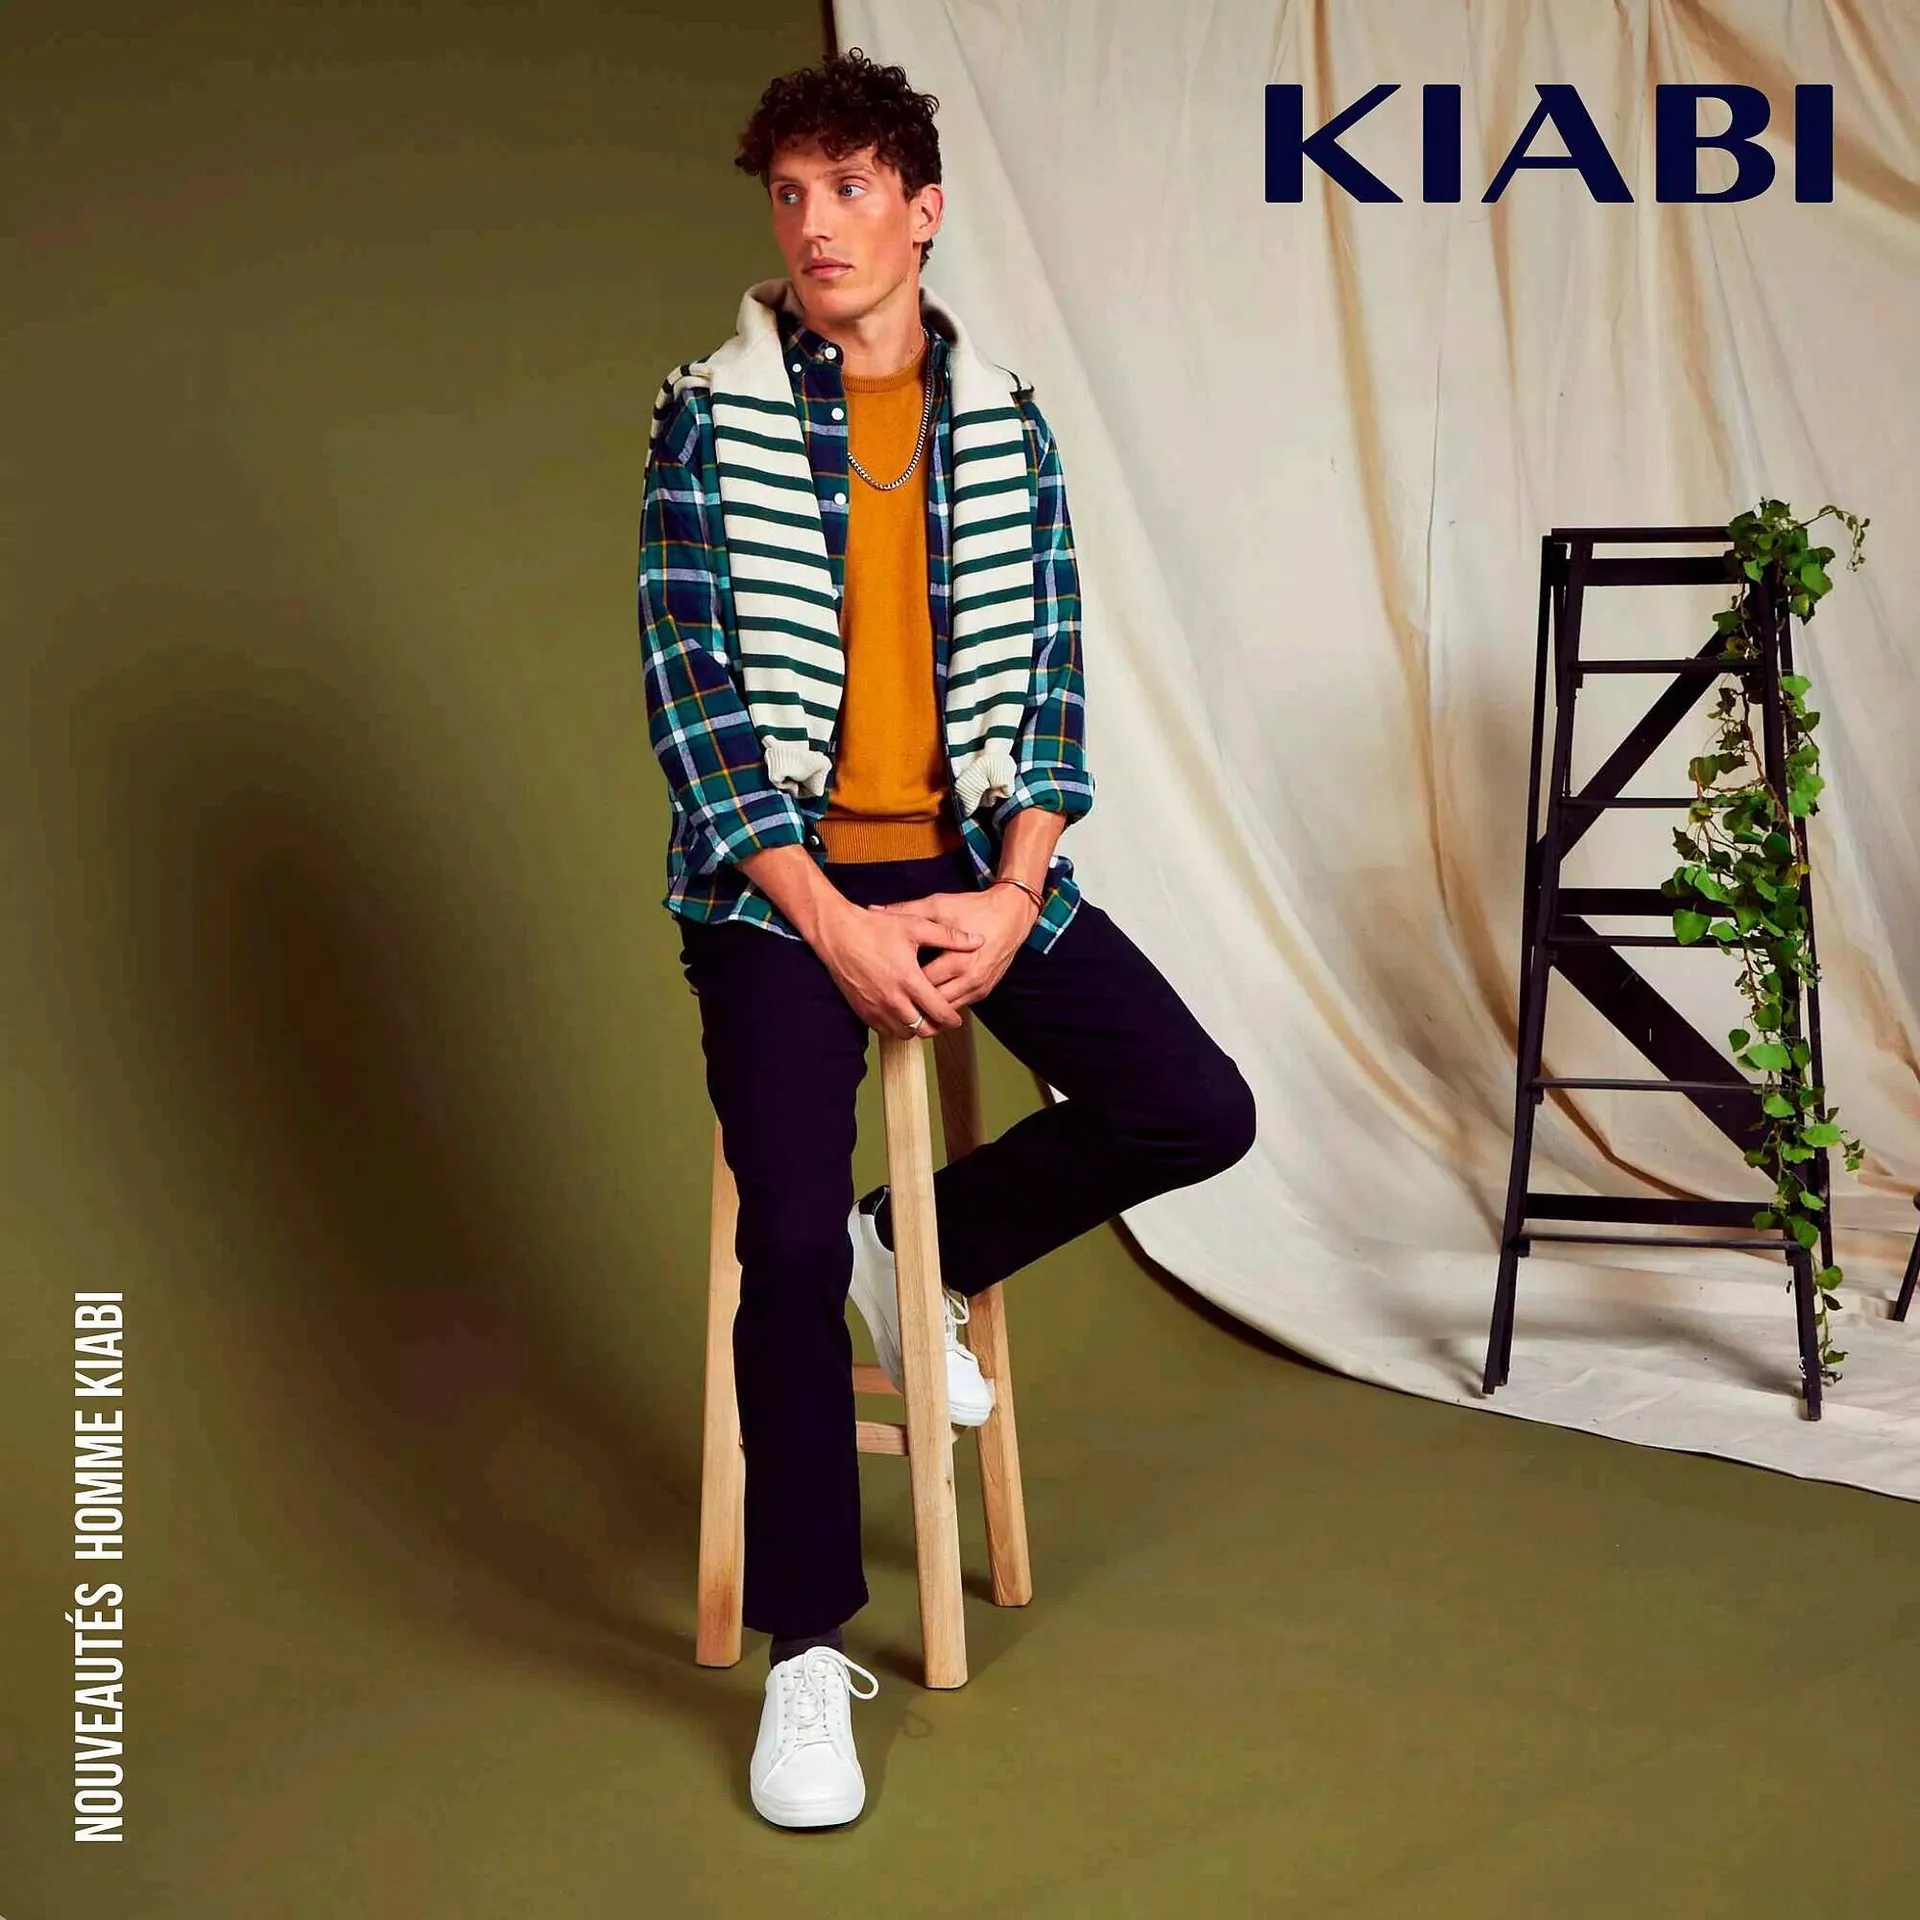 Kiabi folder - 1